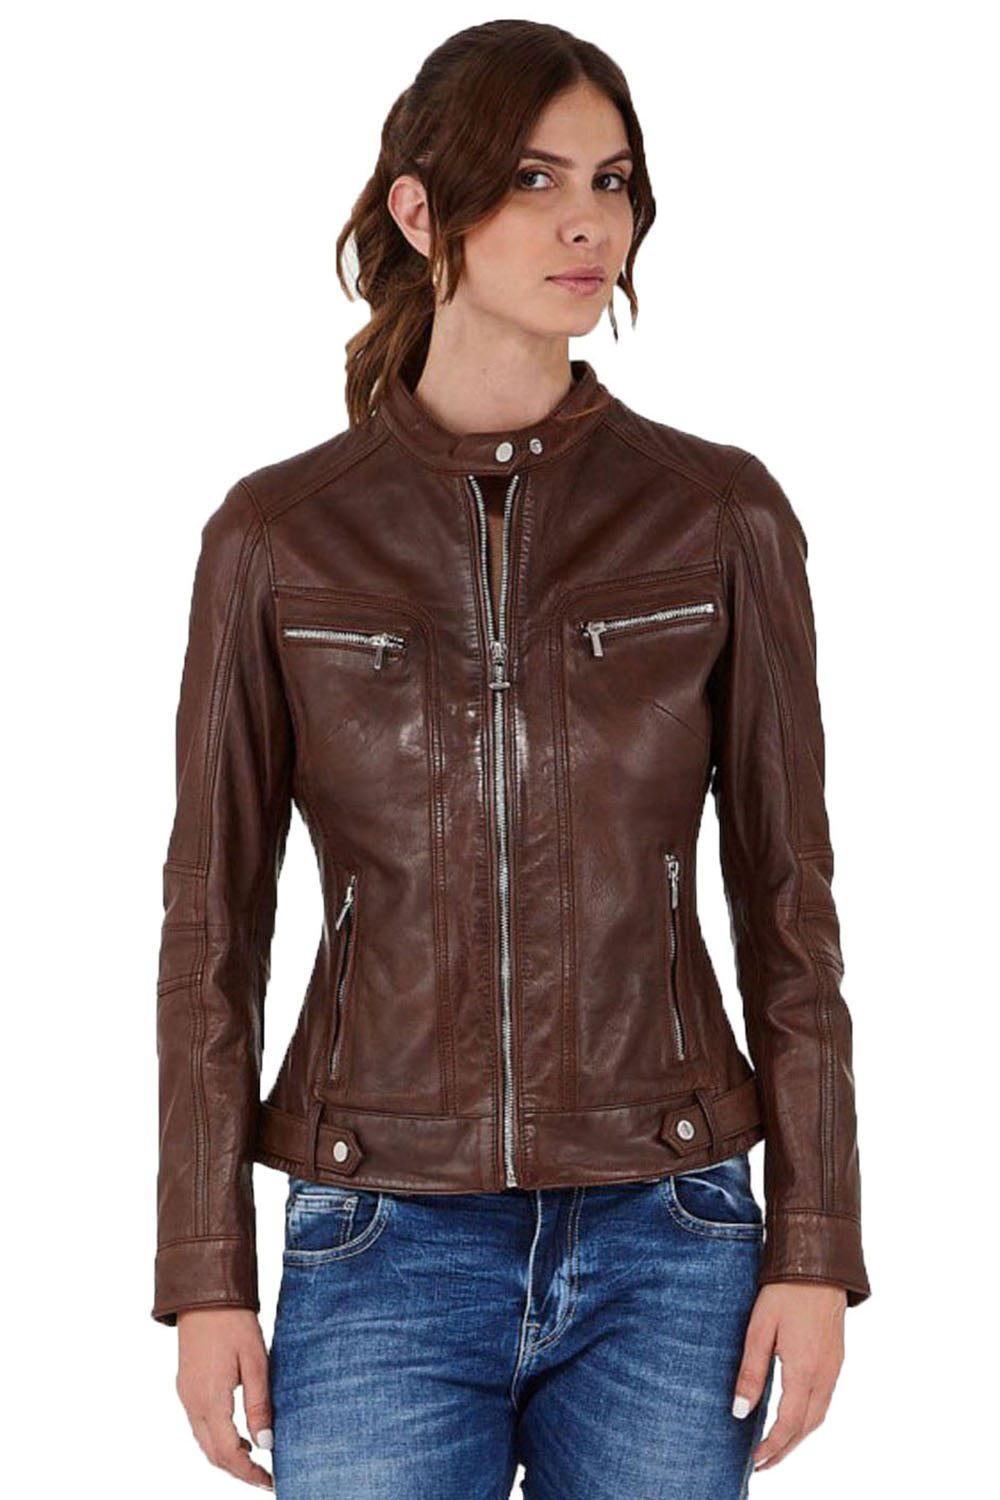 Women Genuine Leather Jacket WJ112 SkinOutfit